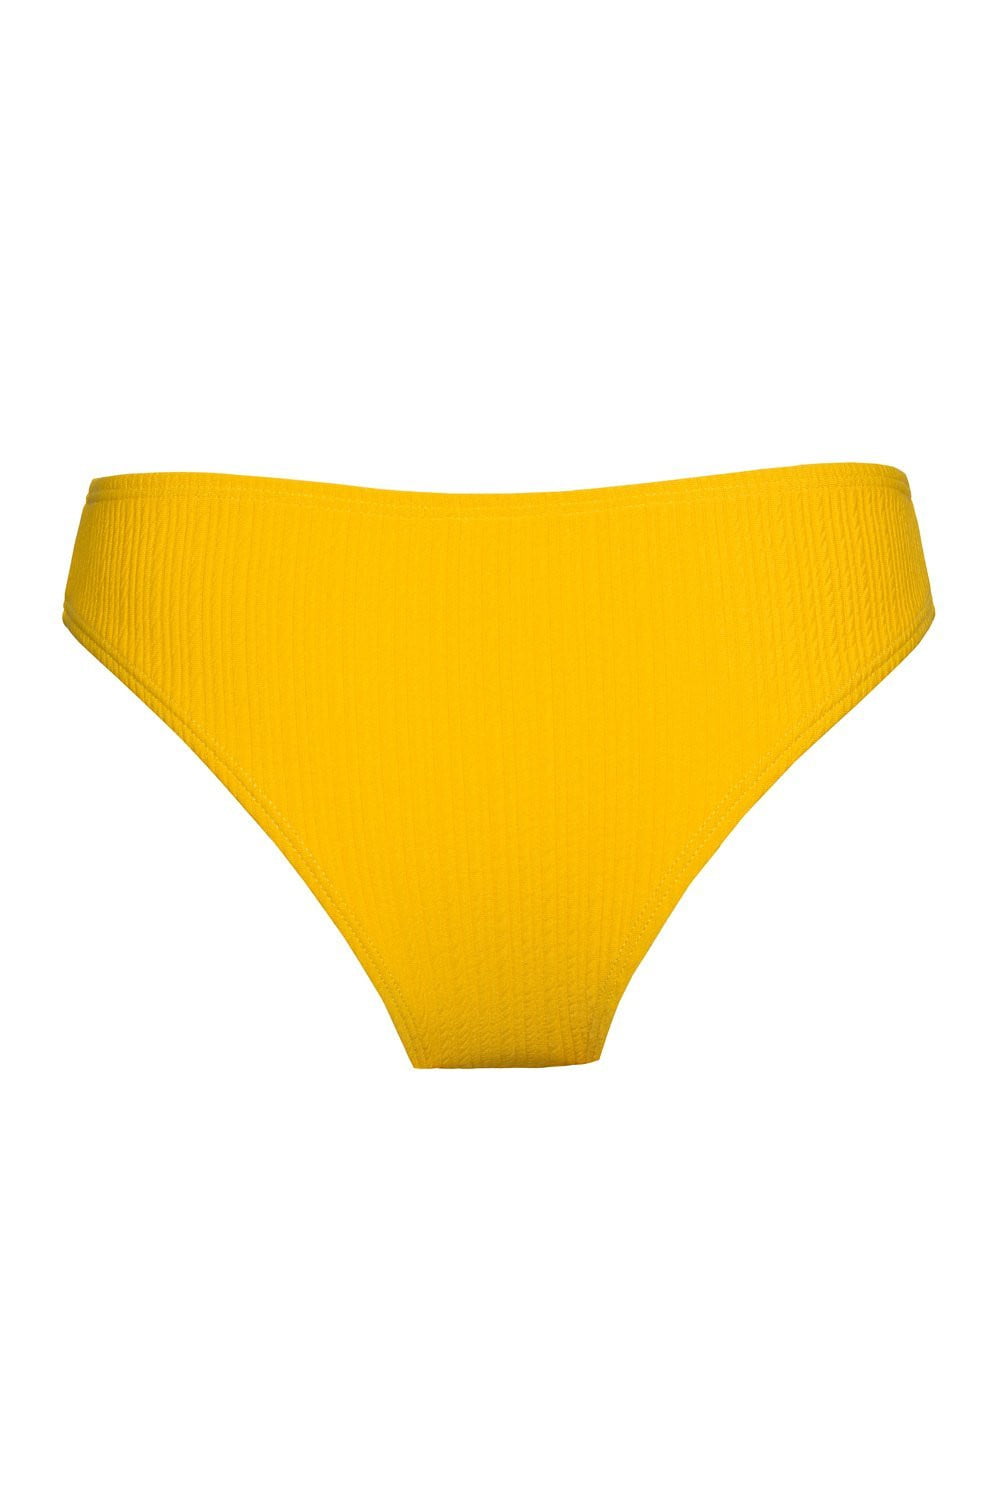 Mustard Low Rise Bikini Bottoms (2079027003451)